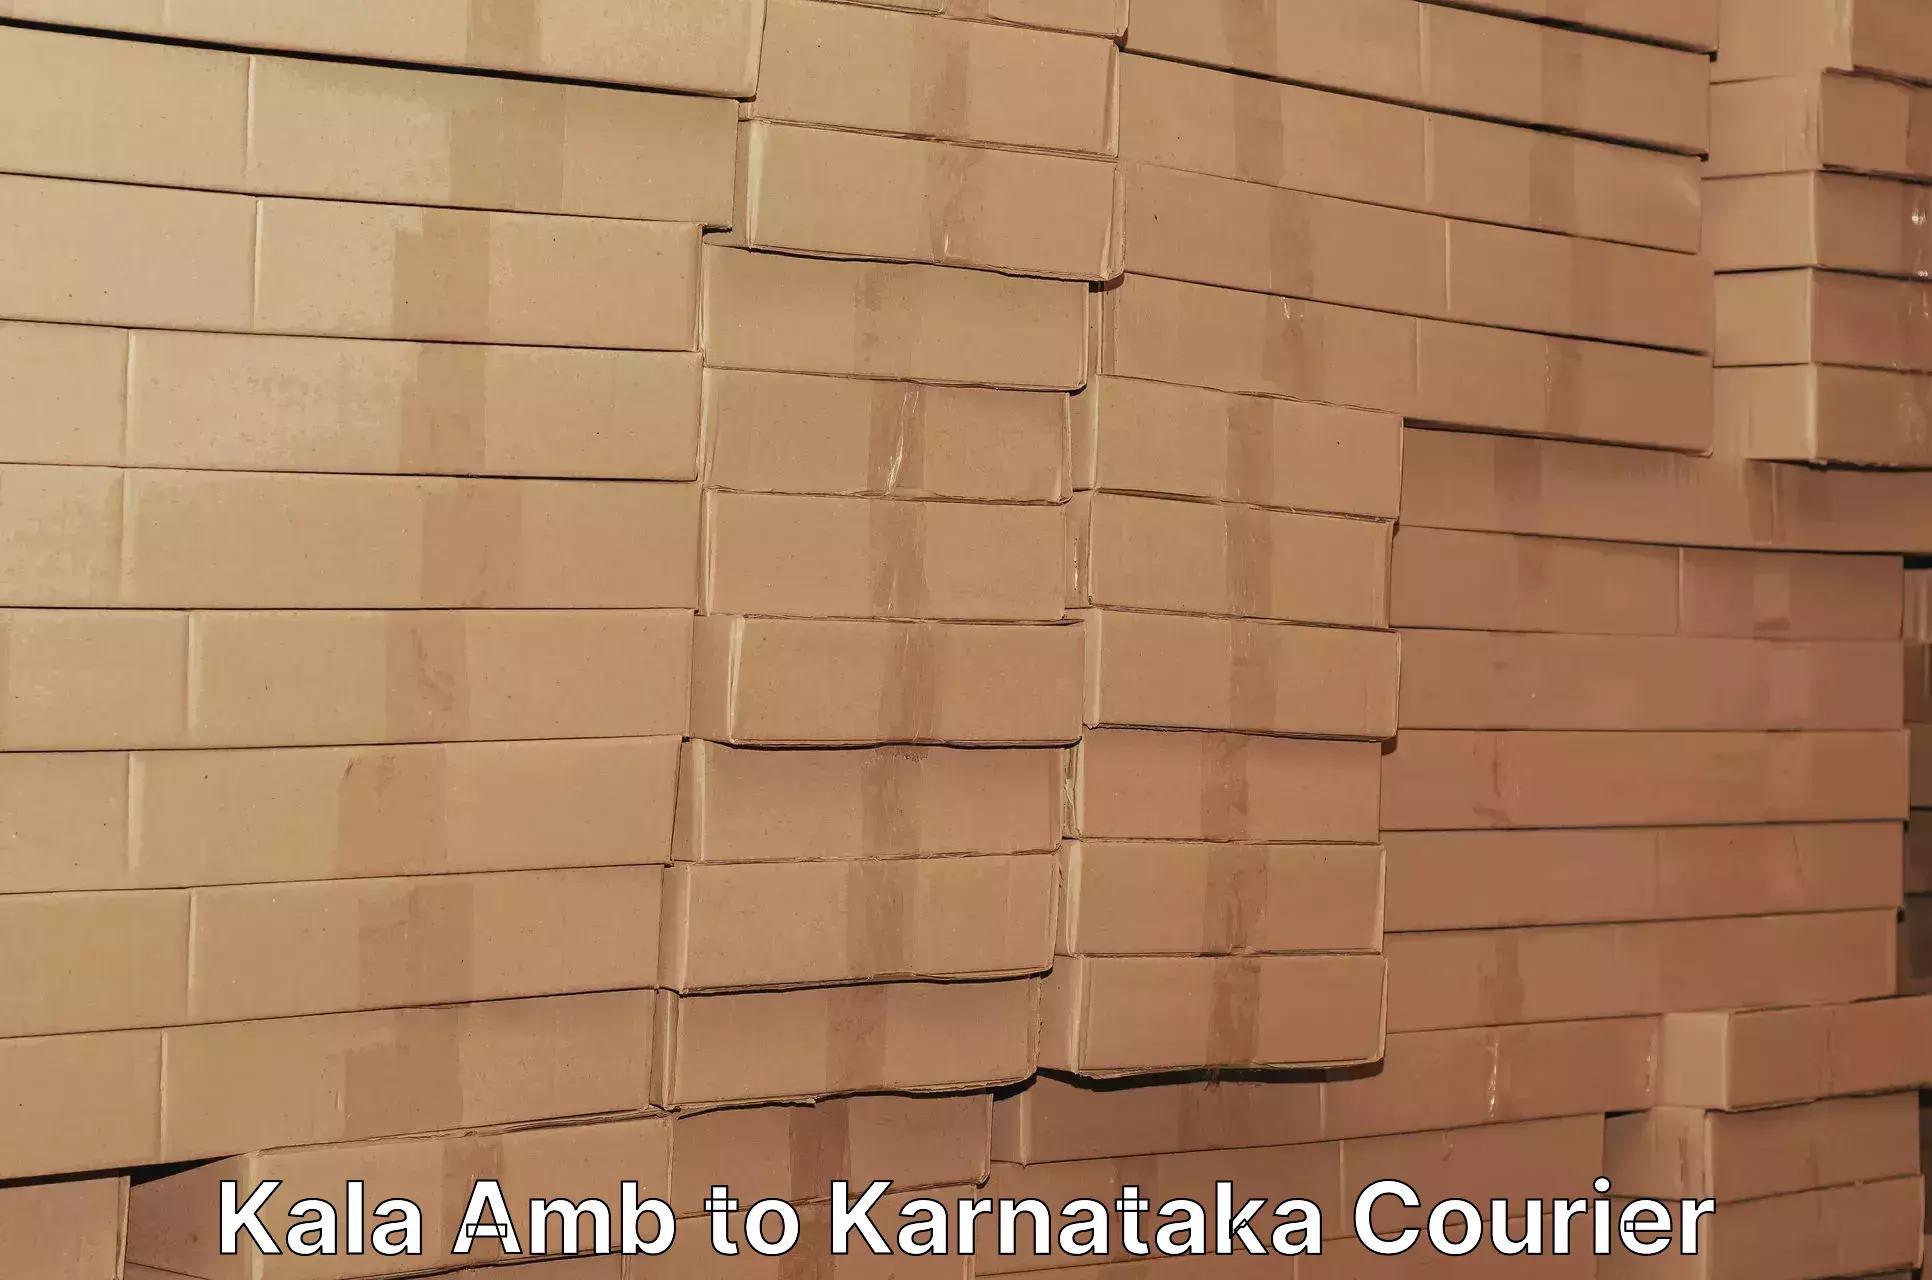 Shipping and handling Kala Amb to Karnataka